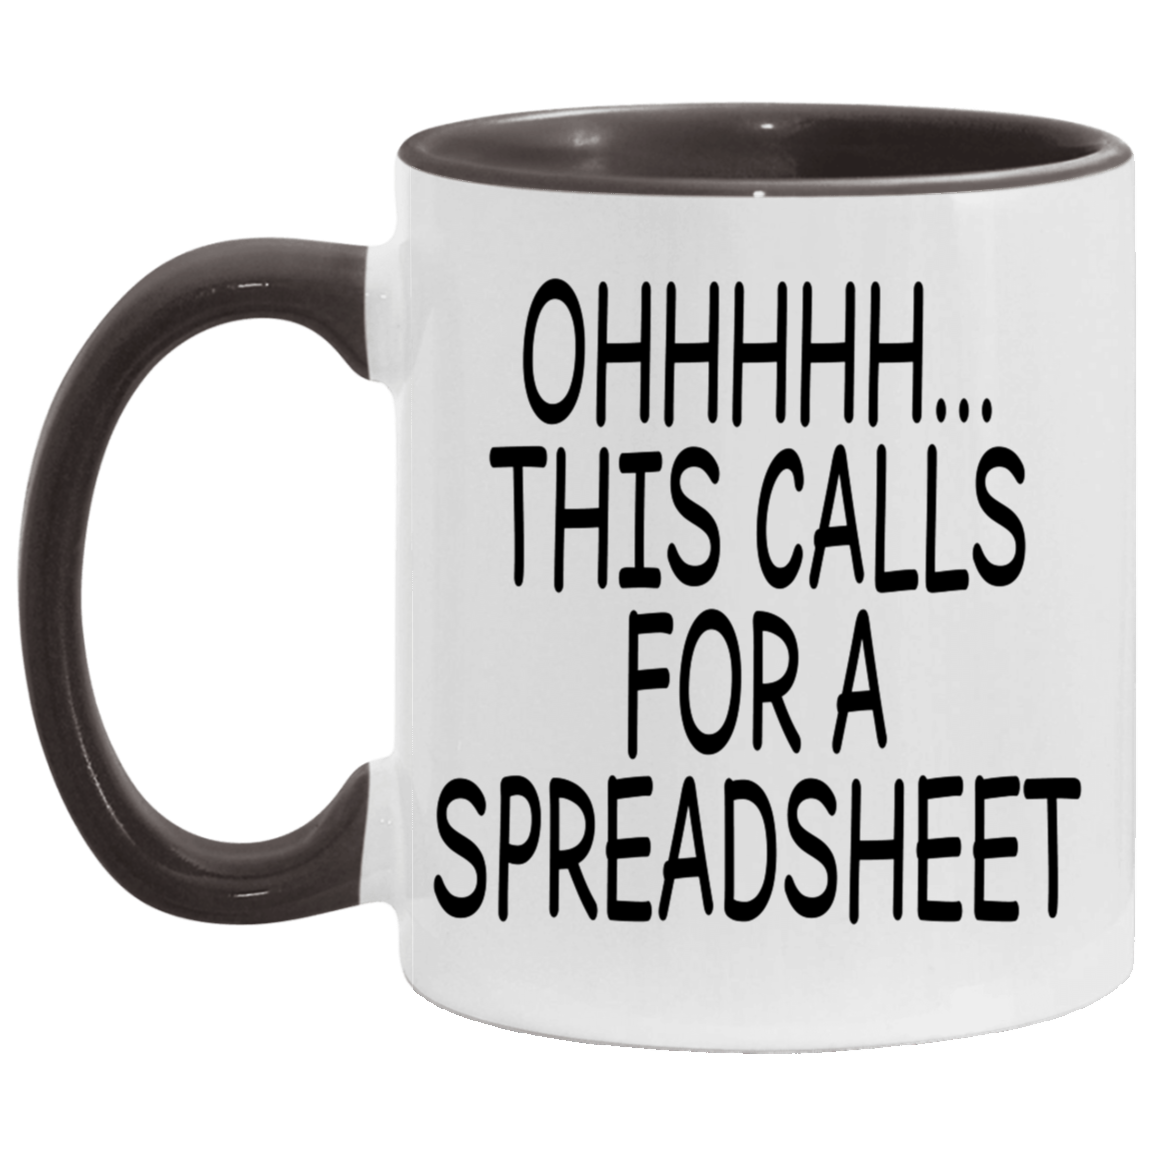 Ohhhhh Spreadsheet! [11oz Accent Mug]